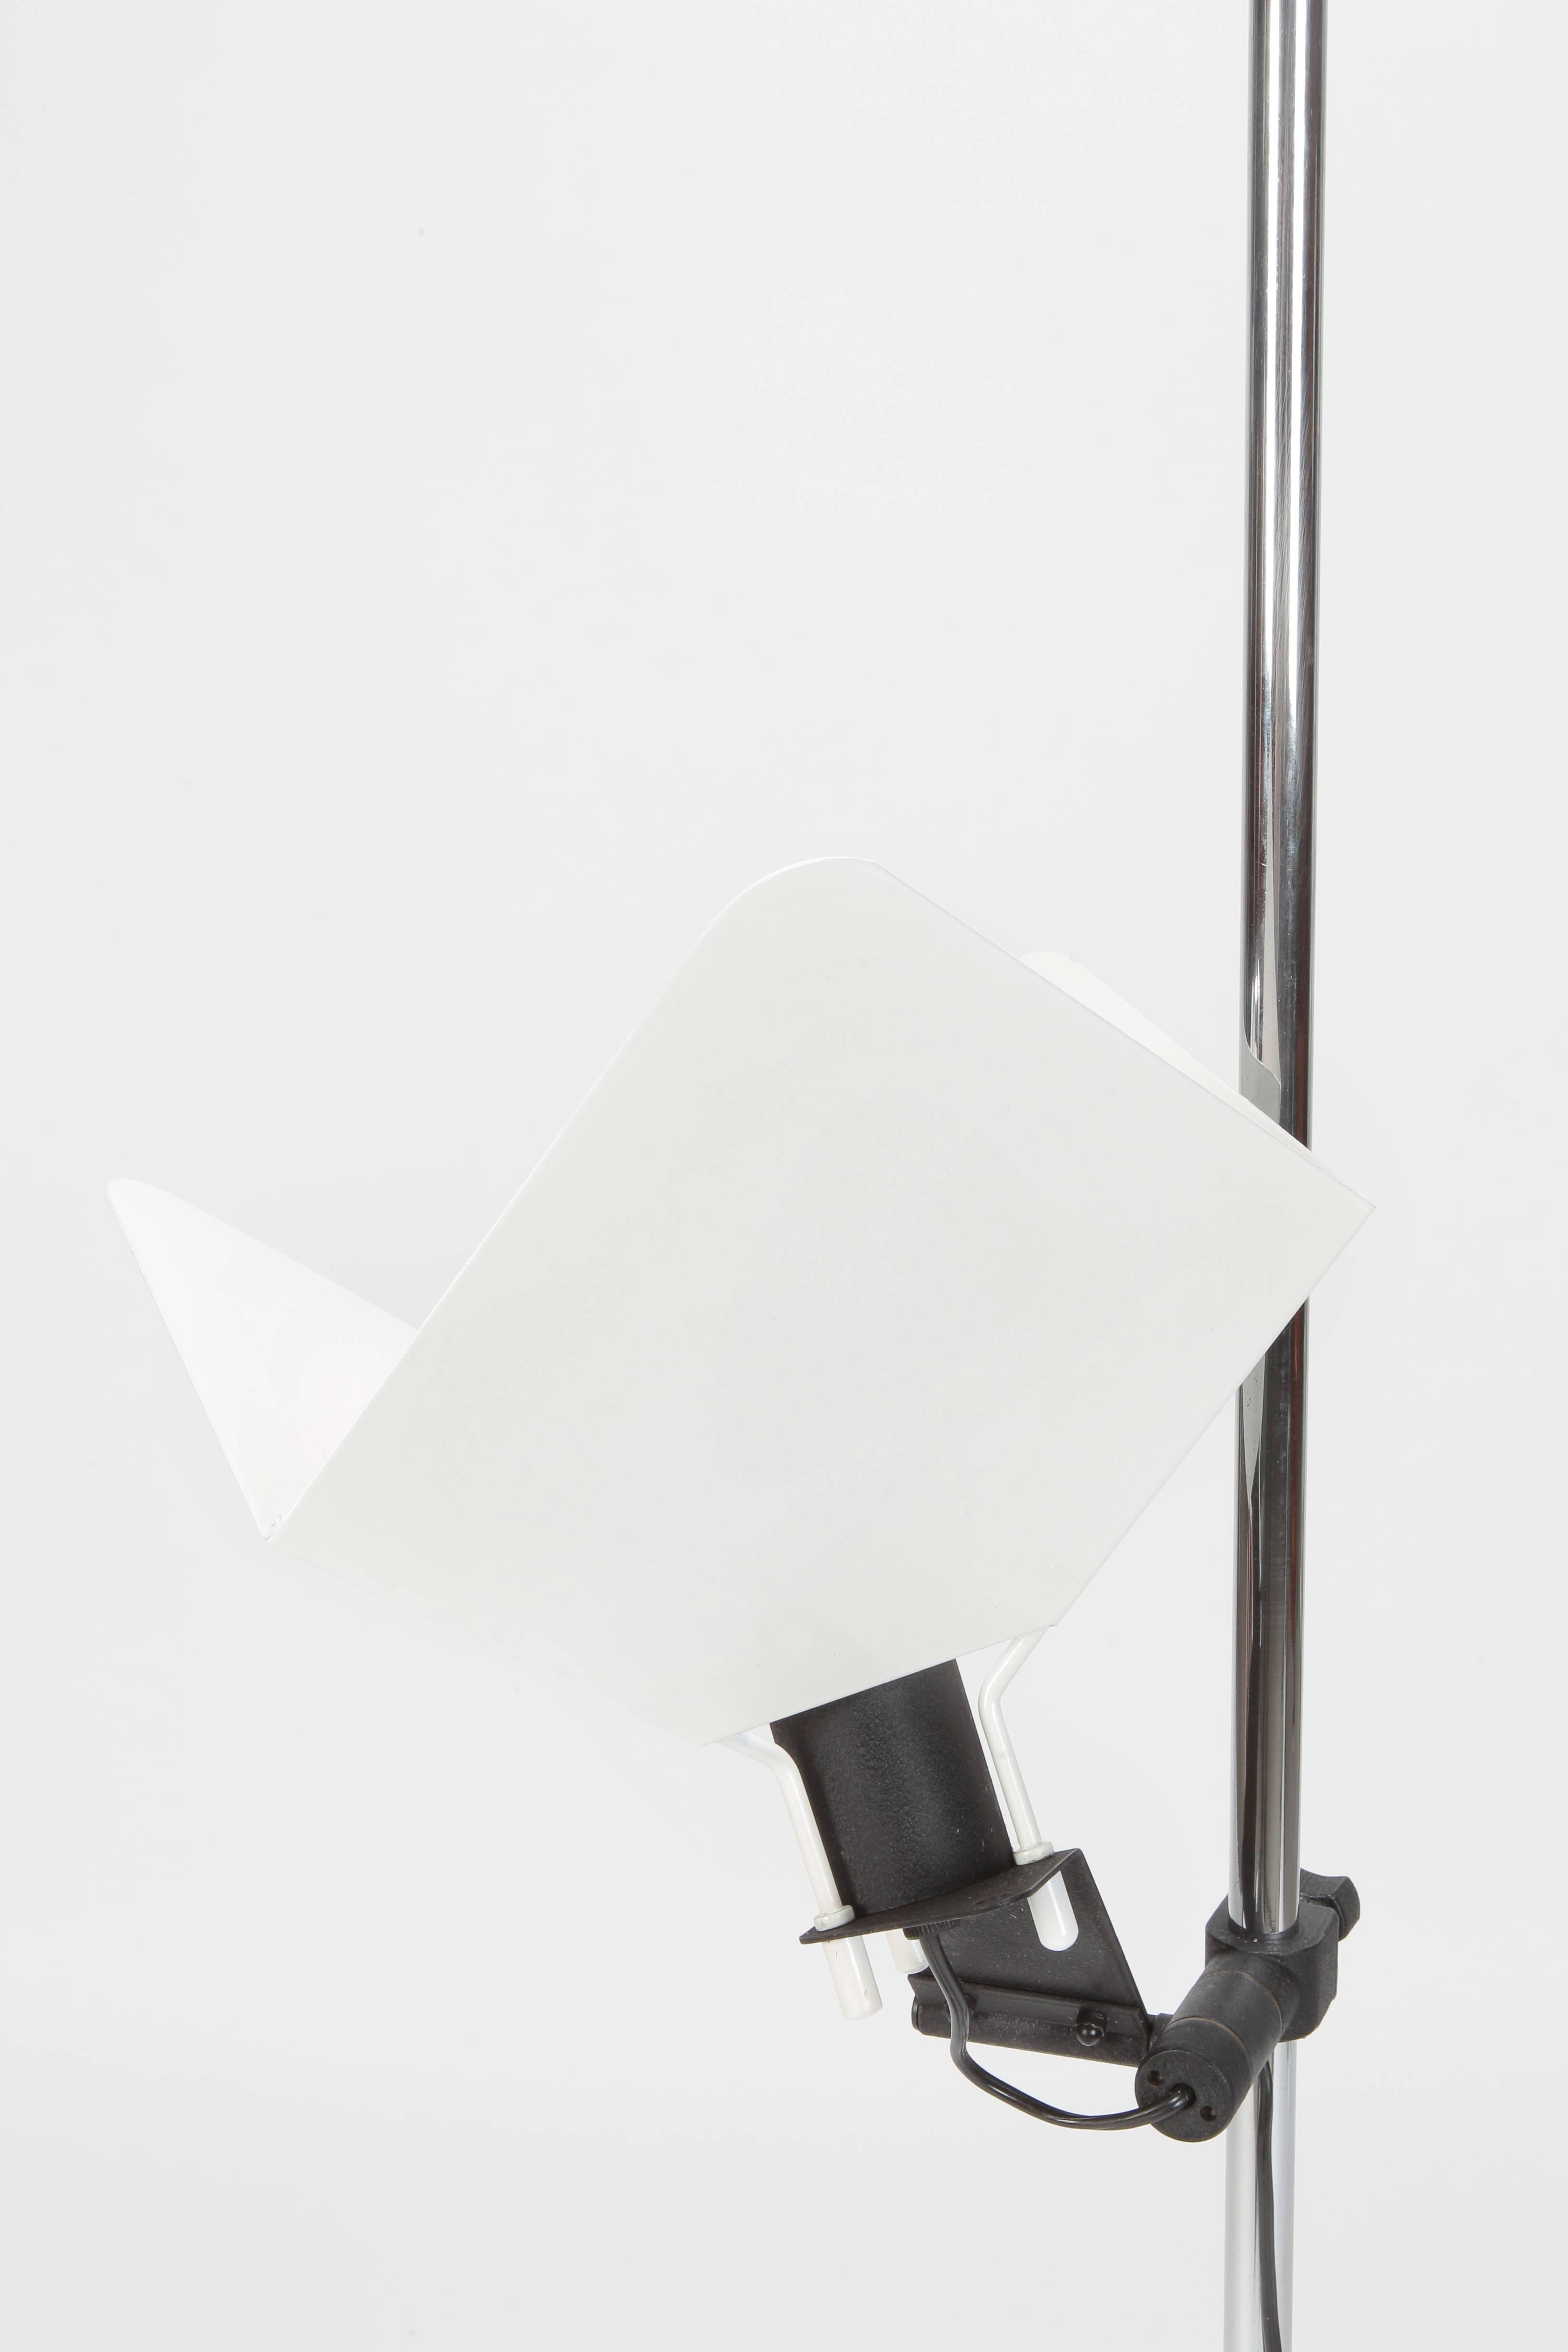 Joe Colombo “Triedro” Floor Lamp Stilnovo, 1970s For Sale 12